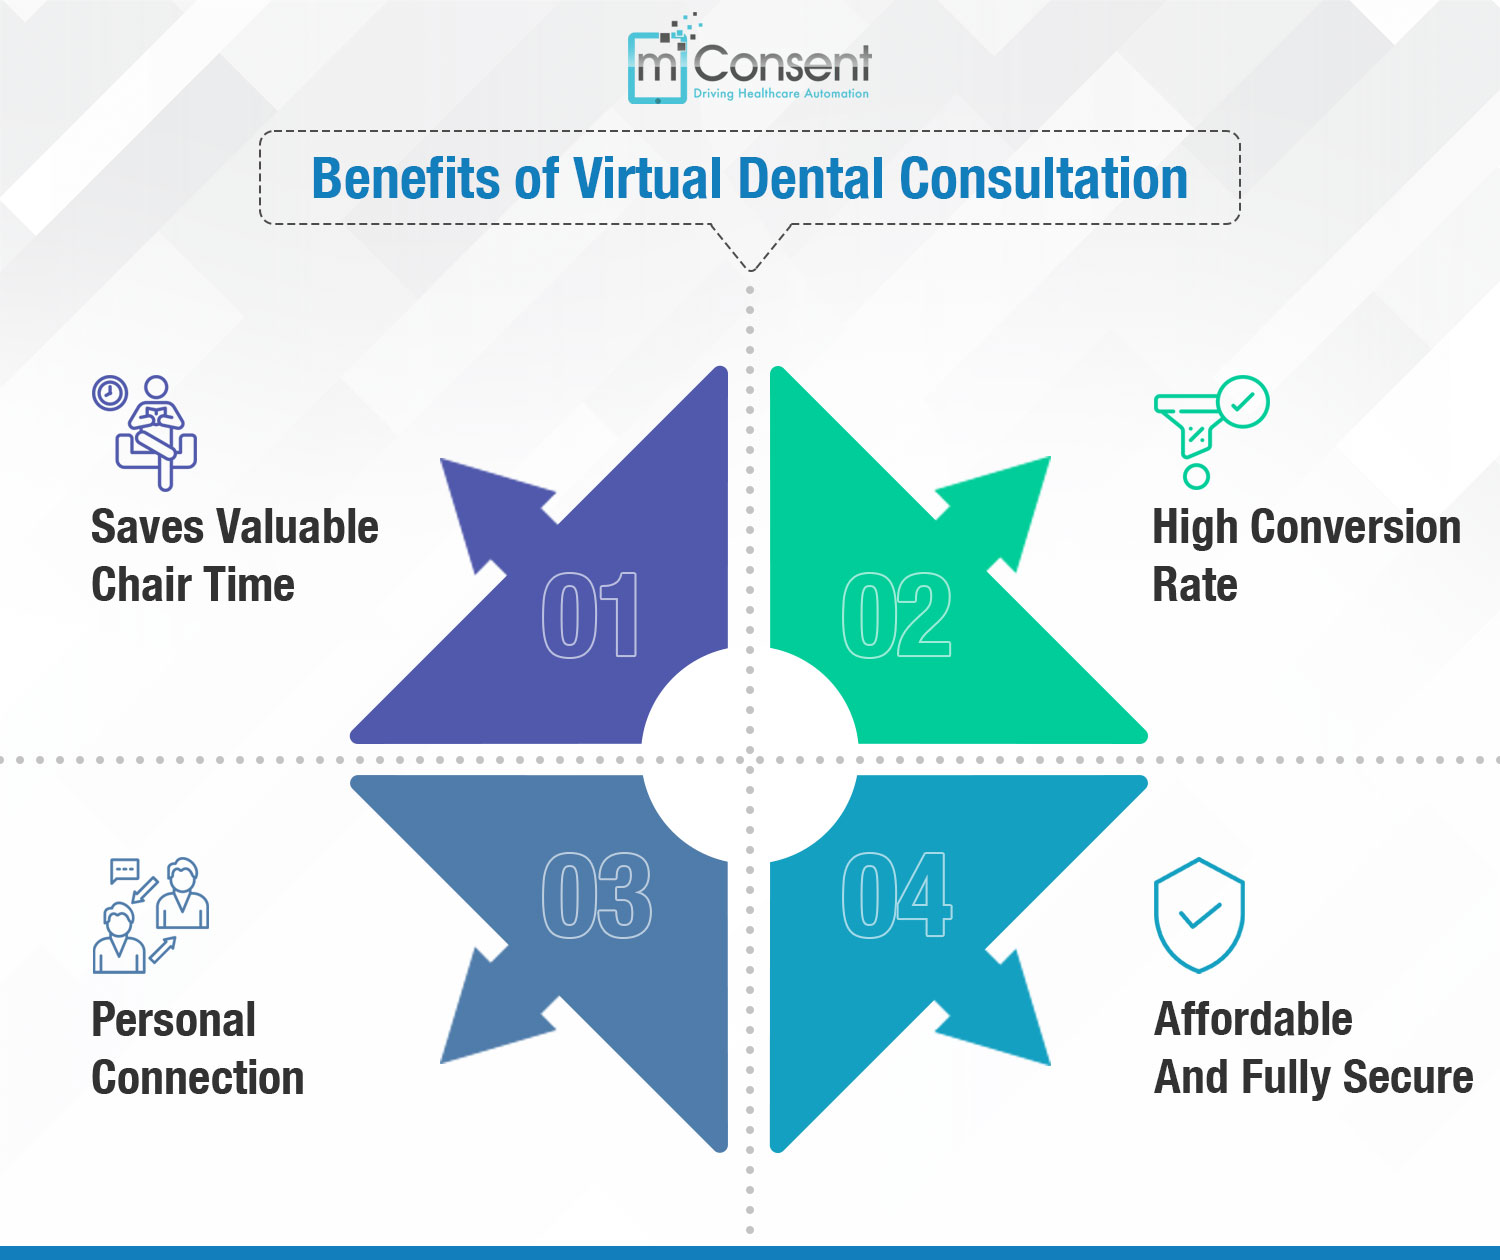 Benefits of Virtual Dental Consultation